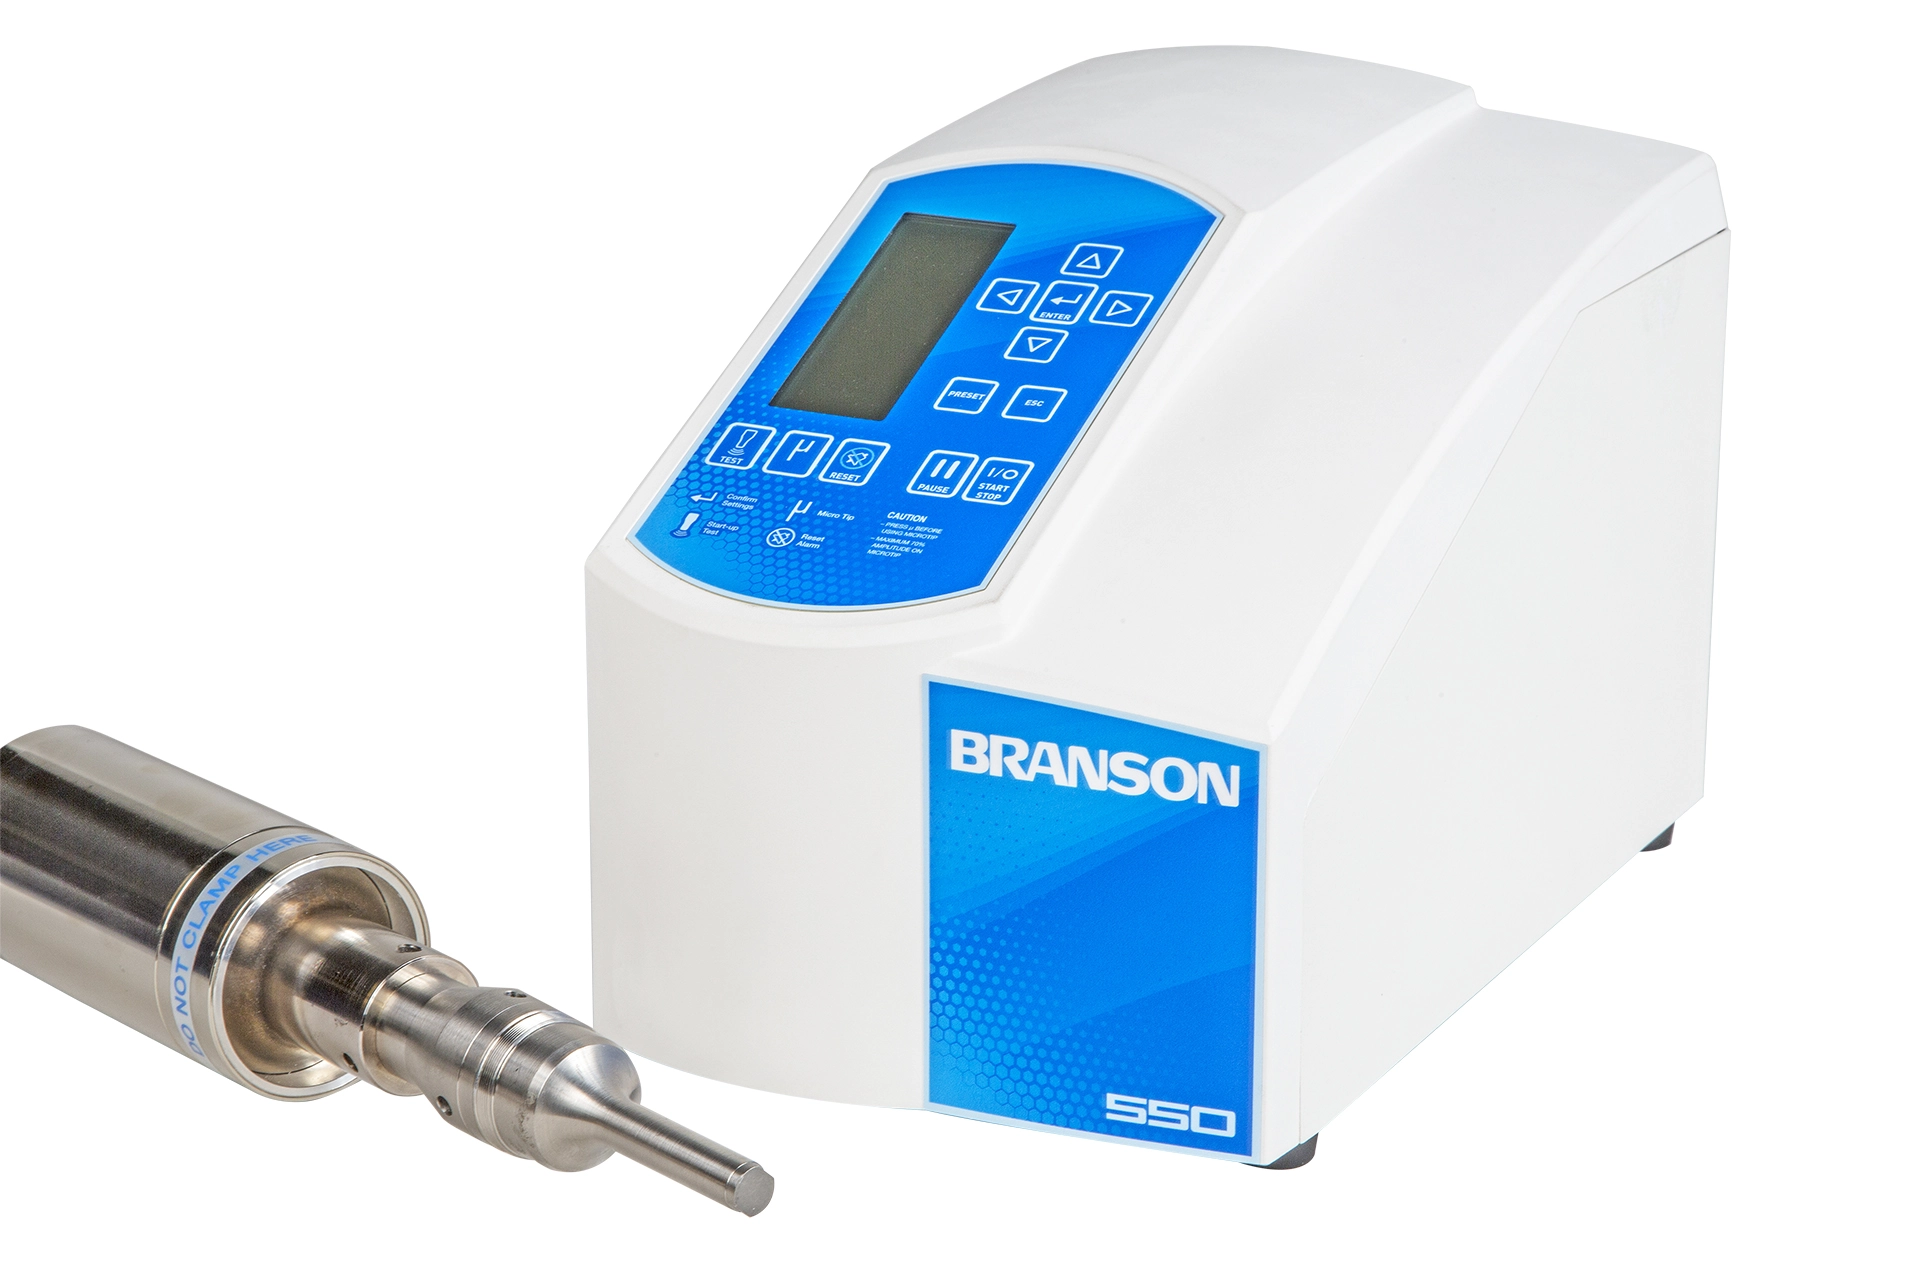 Branson Sonifier SFX550 Ultrasonic Homogenizer